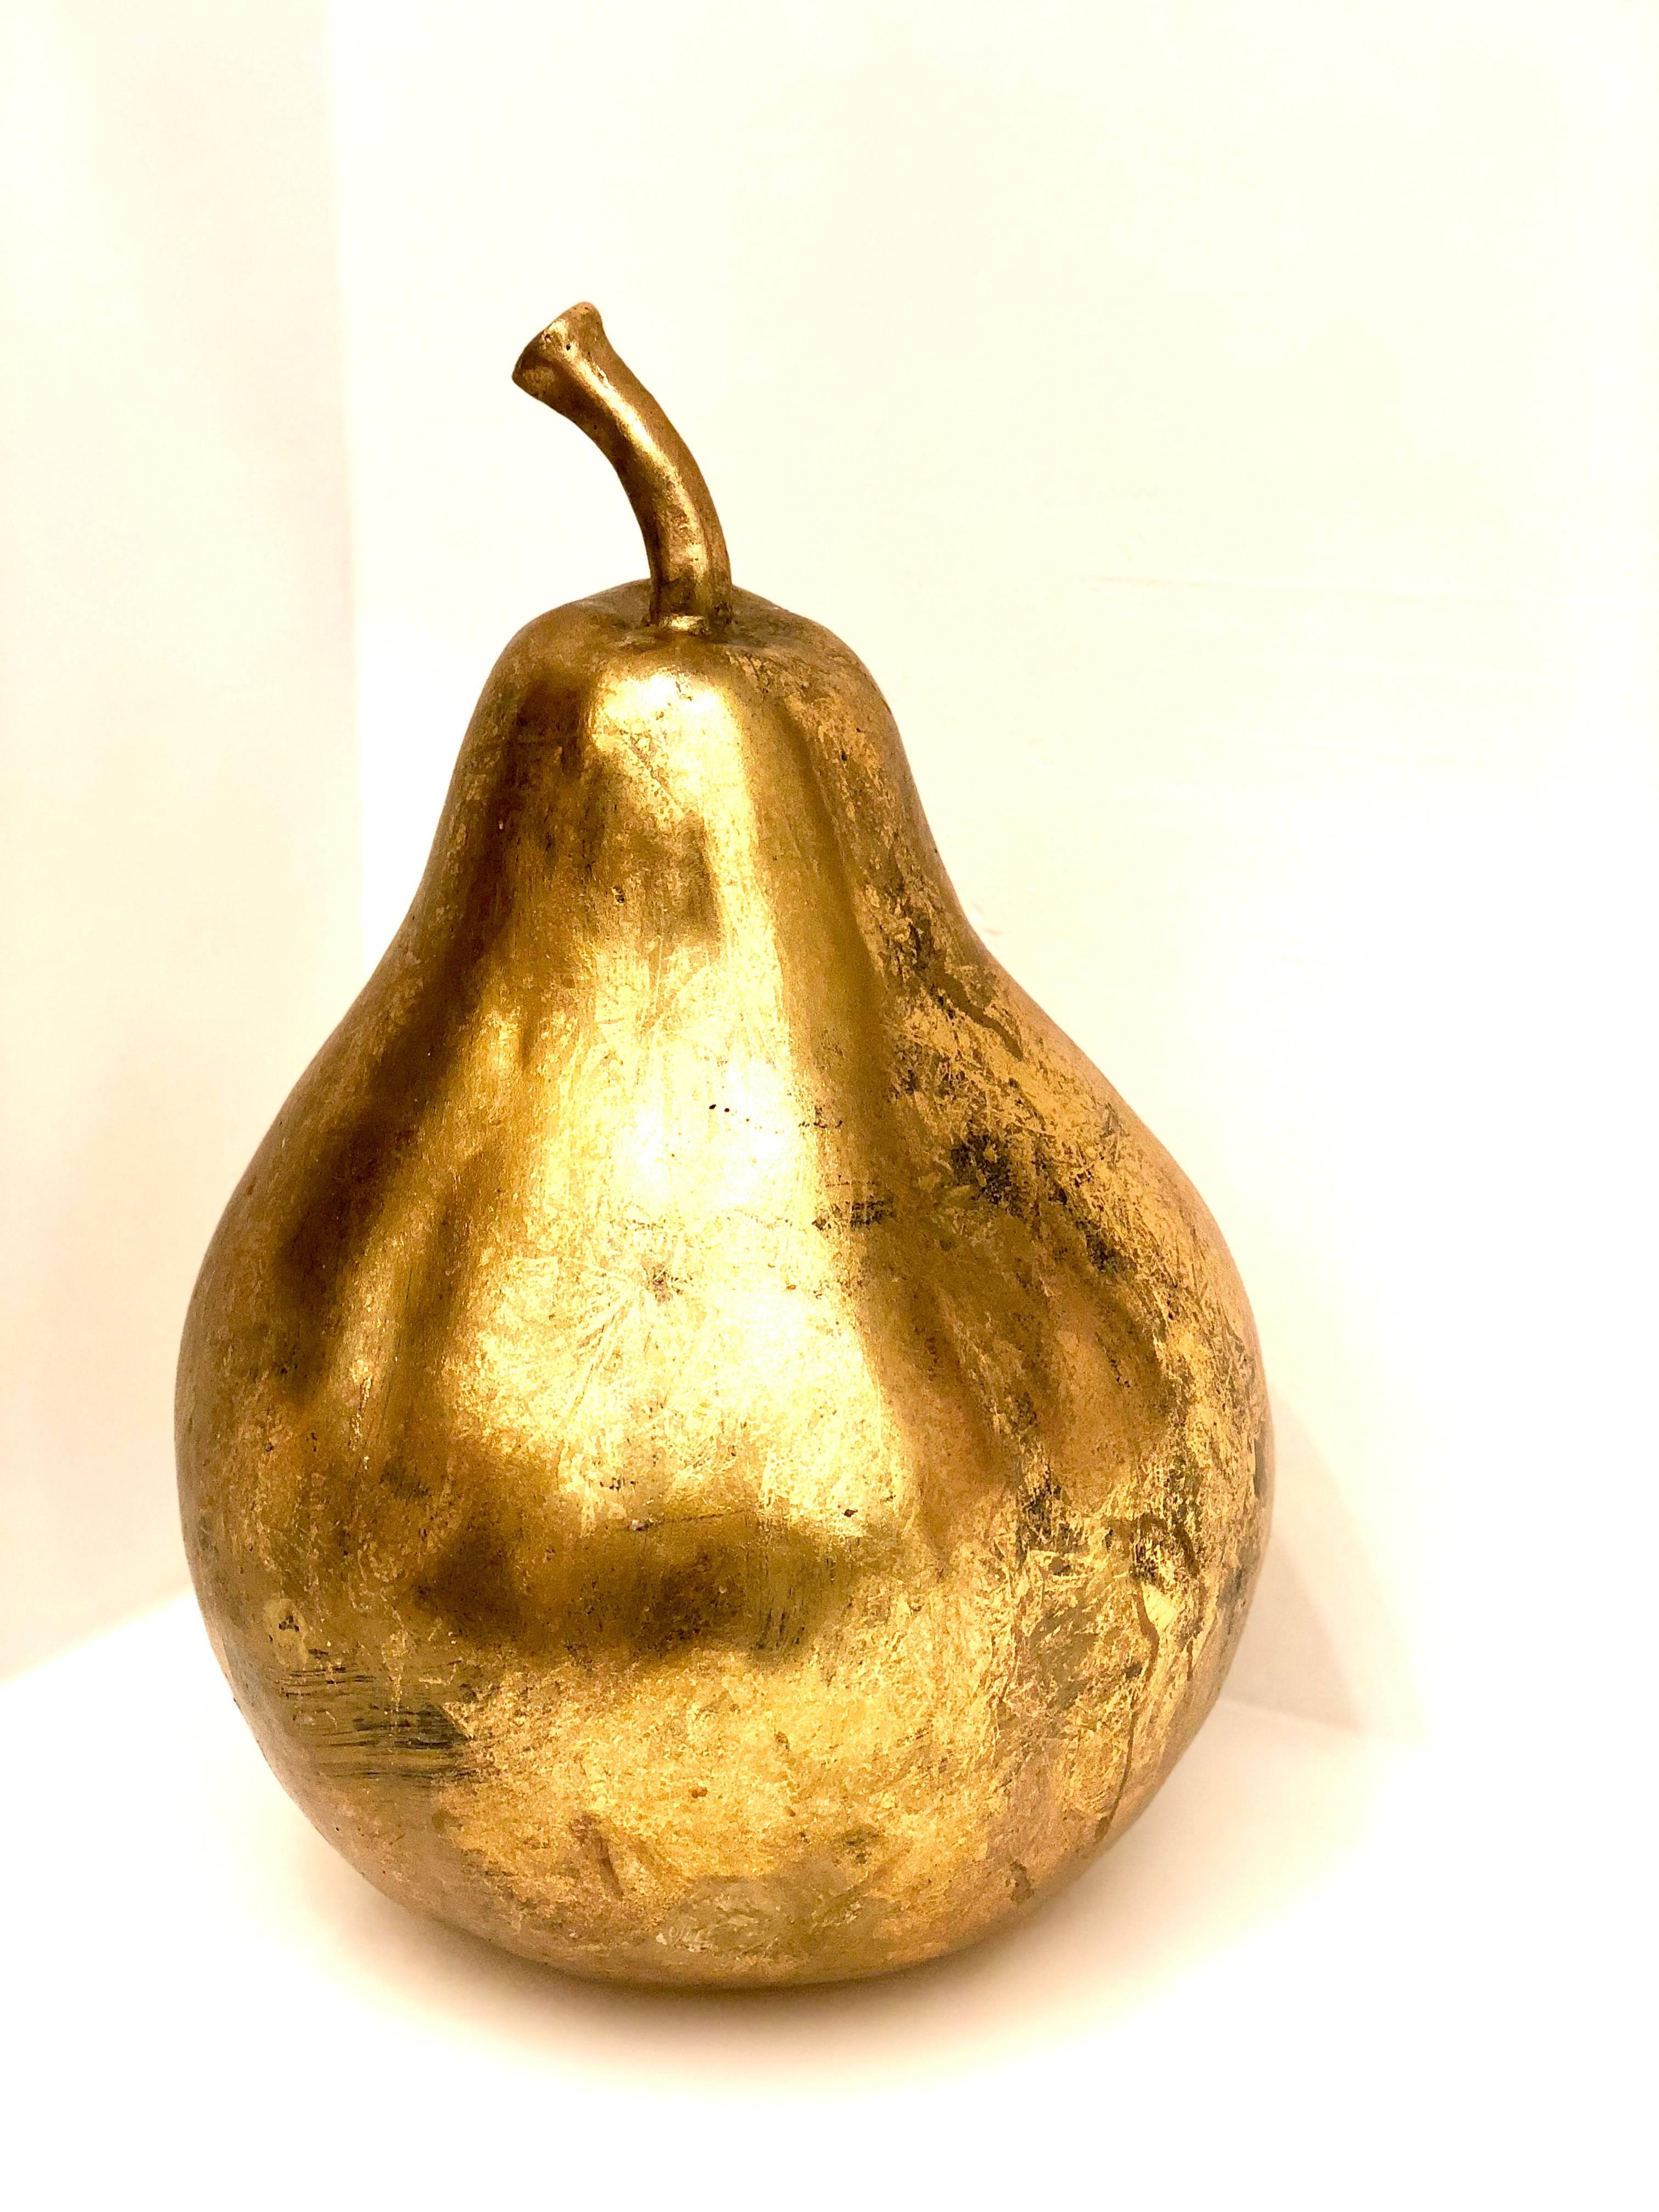 Unique large gold leaf decorative pear, circa 1980s, we think its fiberglass in a gold leaf finish.